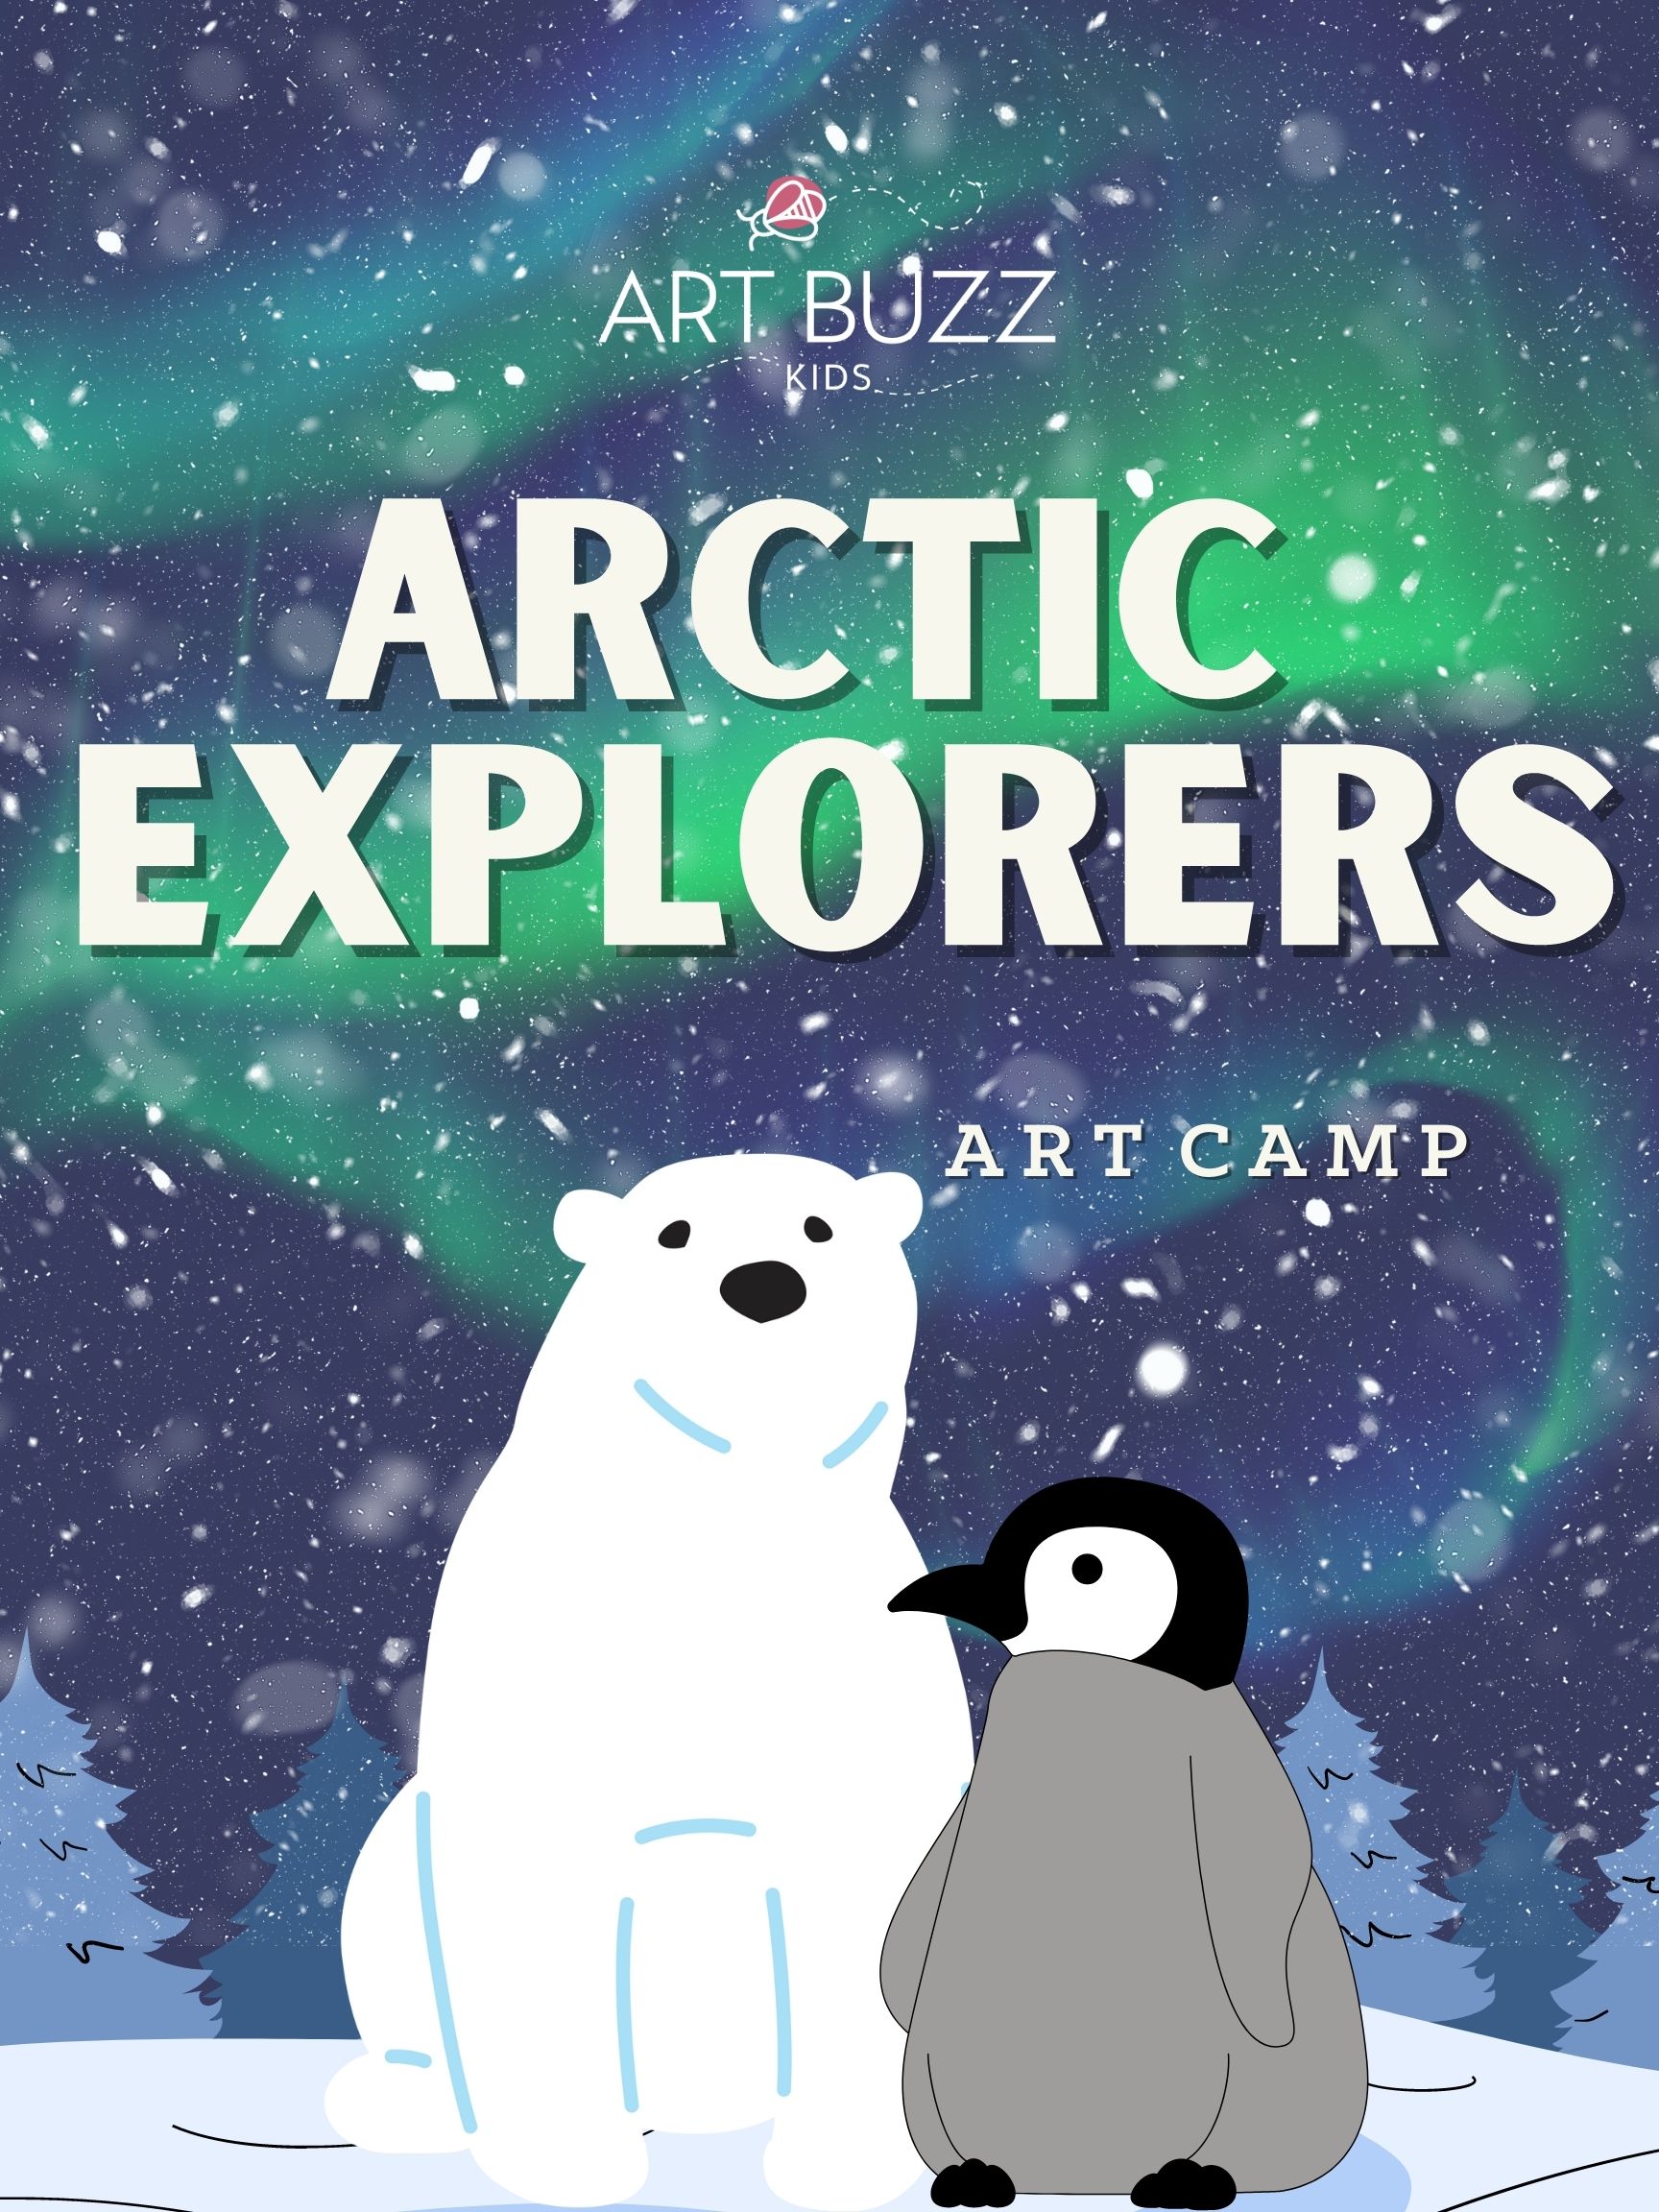 Winter Break Art Camp - Art Skills